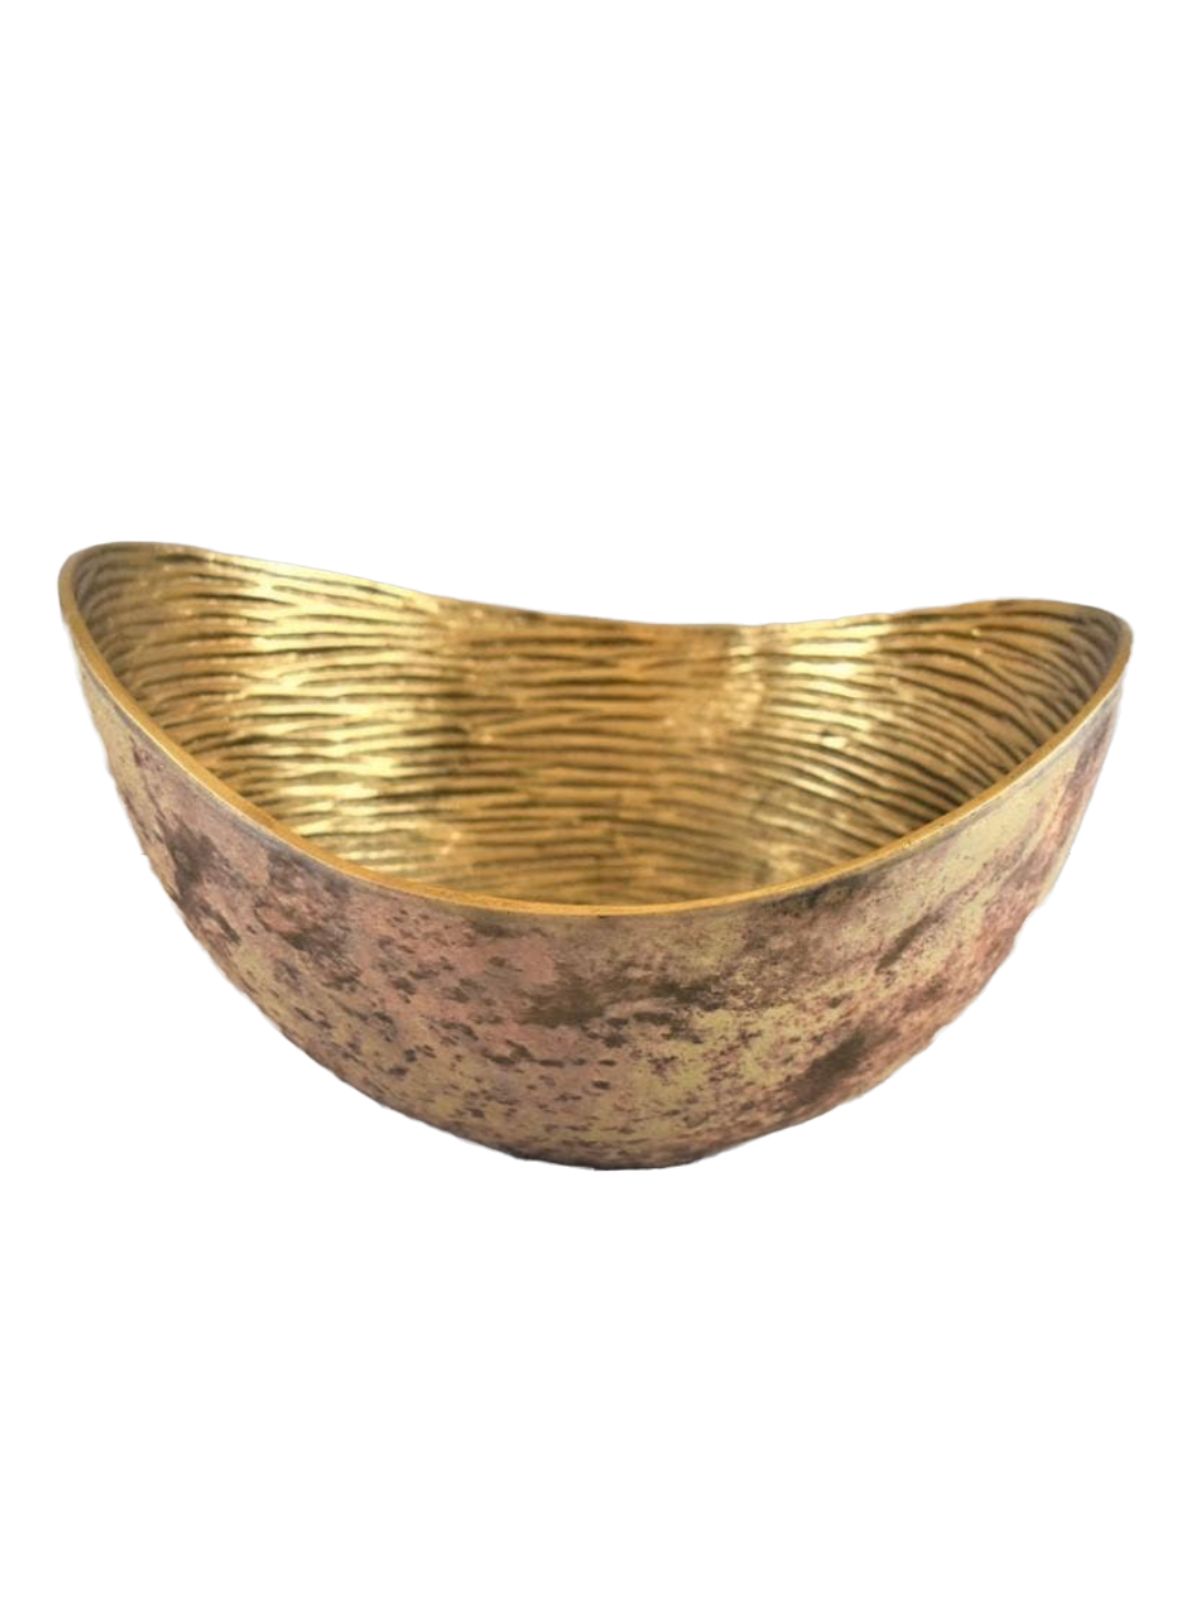 Burnt Nickel Centerpiece Bowl with Golden Inner.